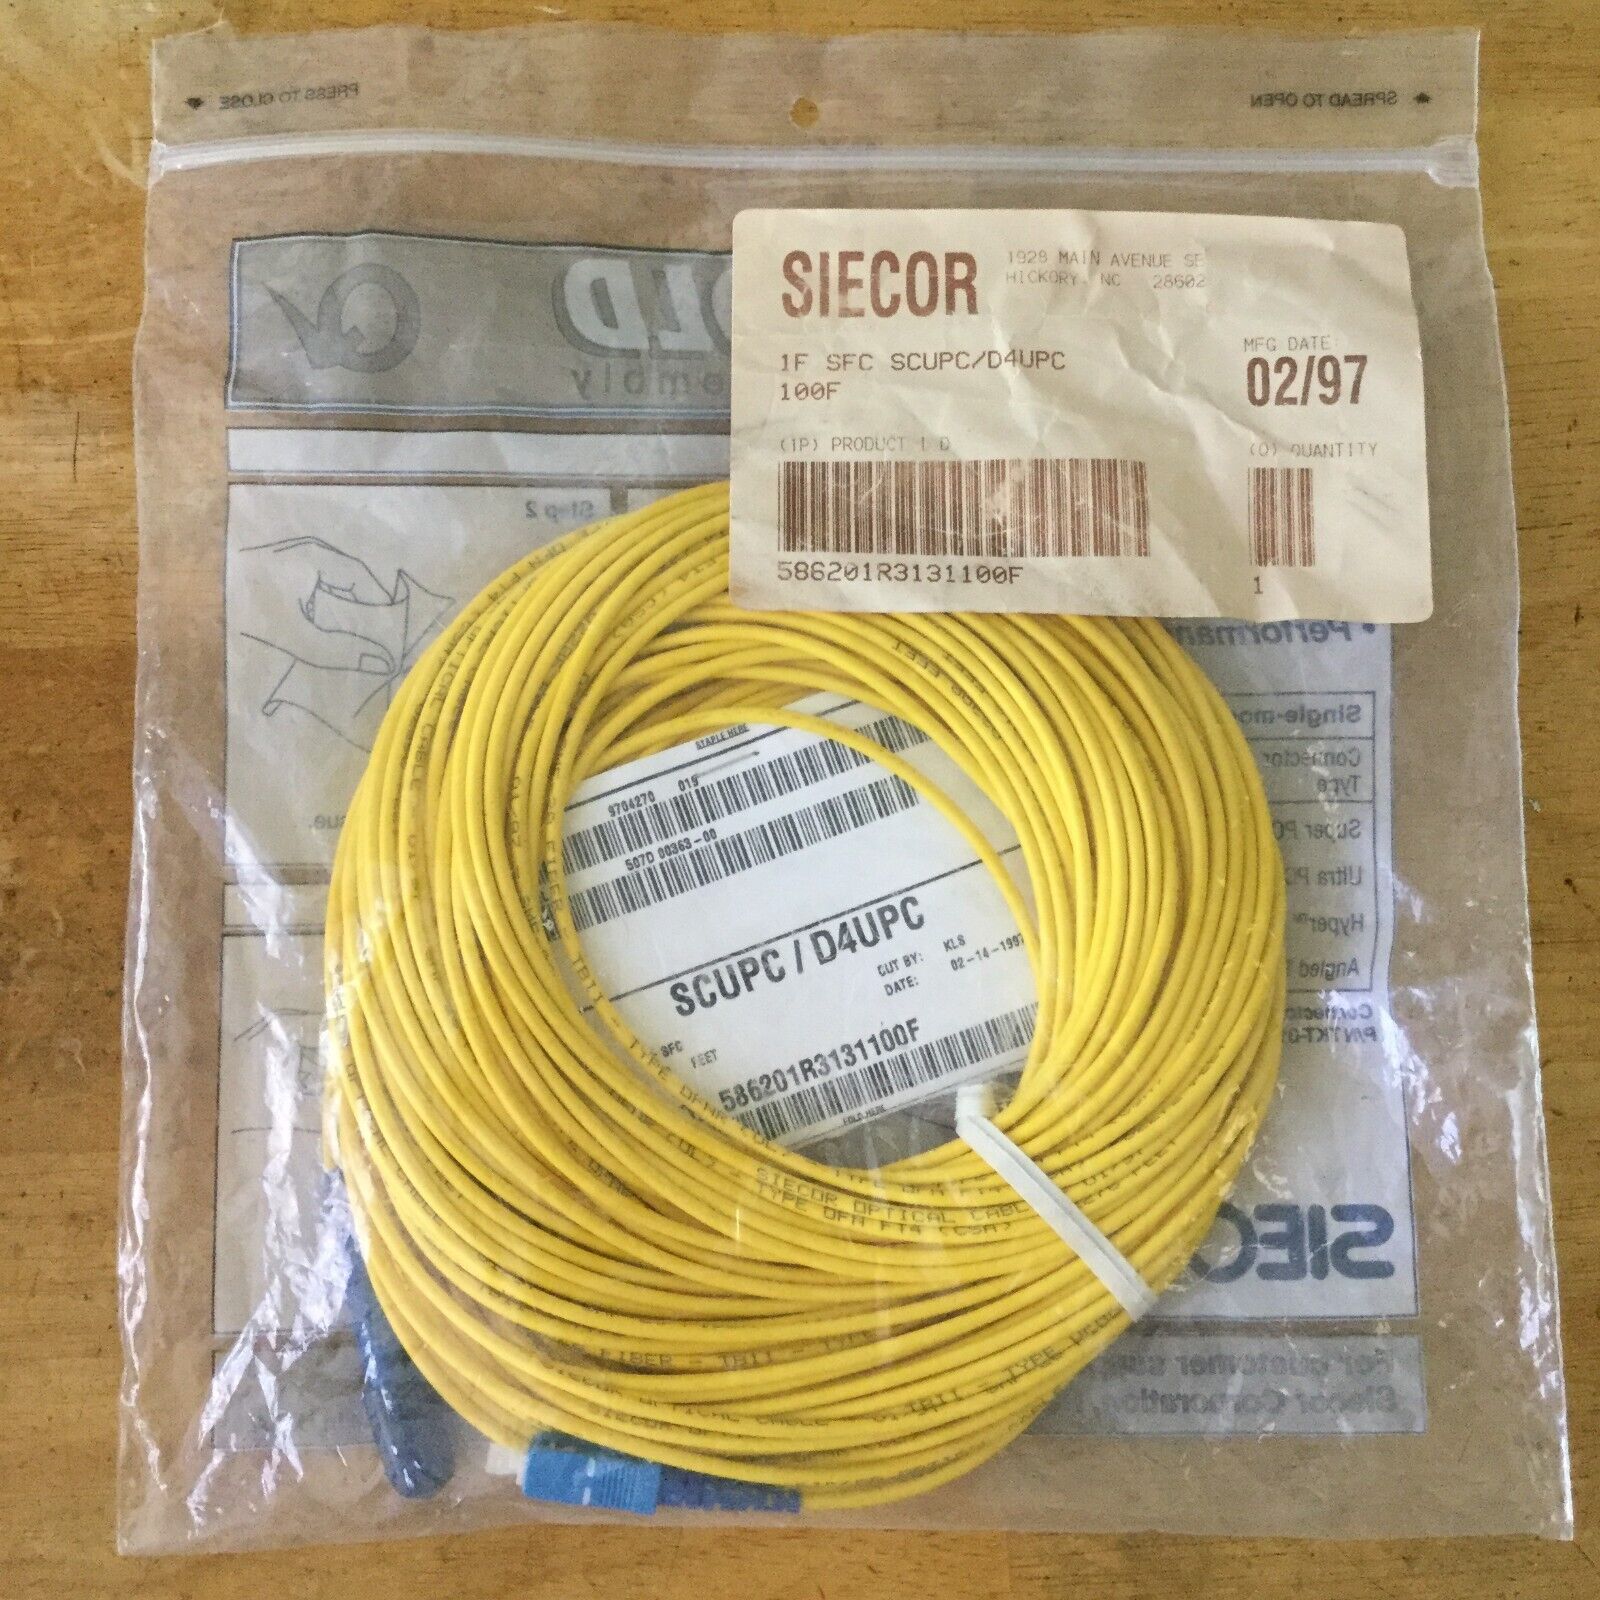 Siecor/Corning Fiber Optic Patch Cord Jumper Cable 1F SFC SC/D4 (UPS) - 100 FT